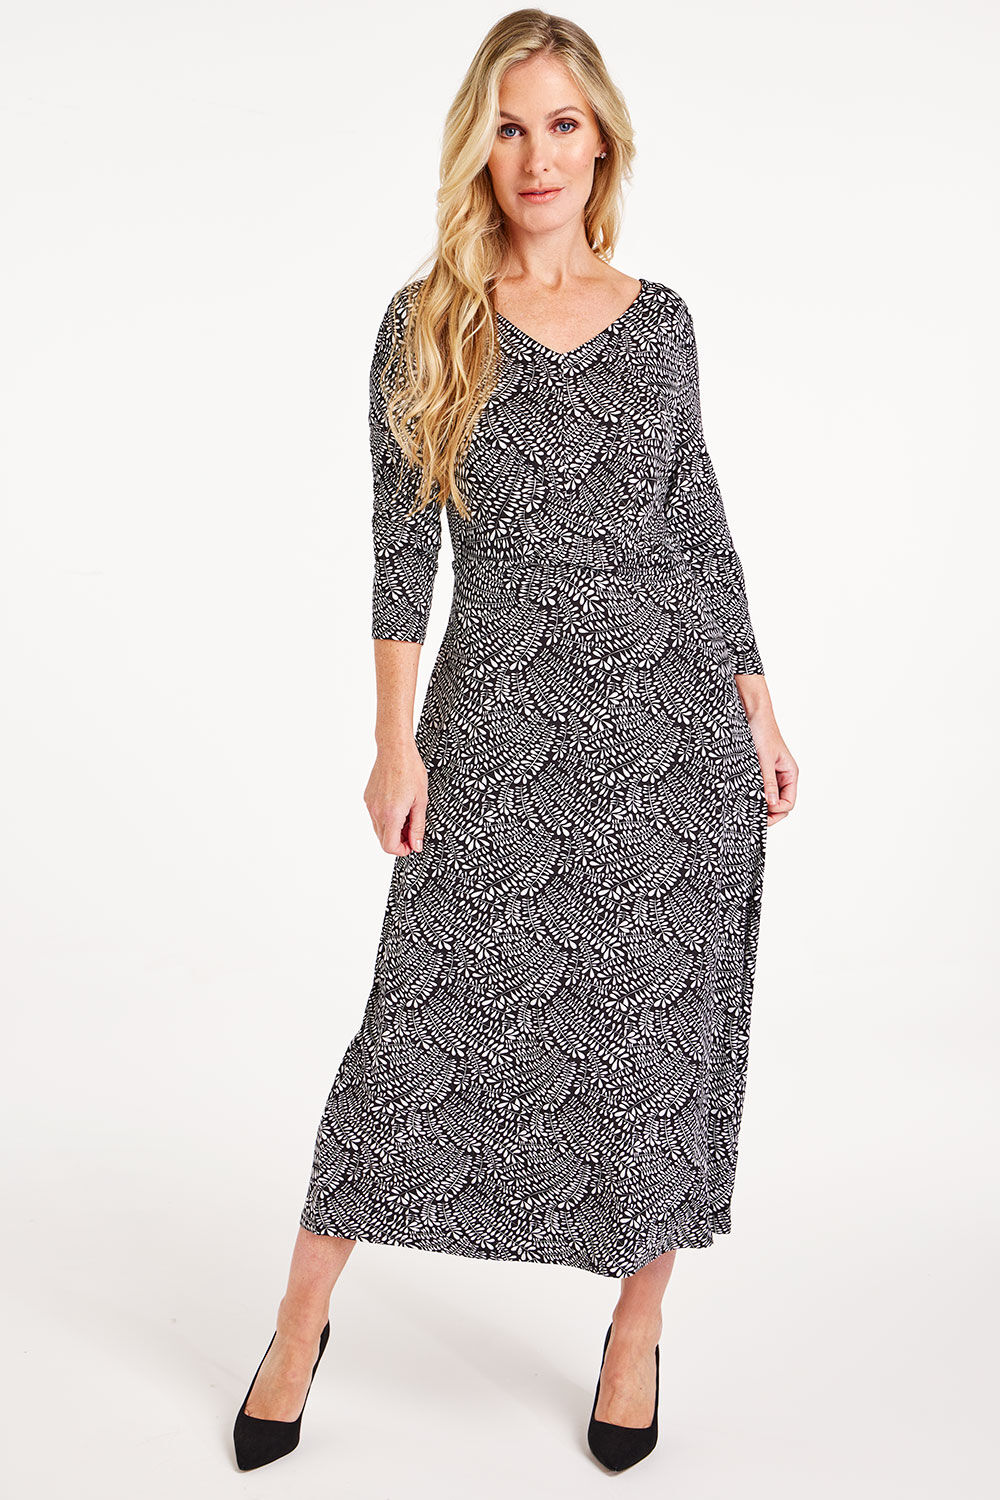 Bonmarche Women’s Black and White Viscose Leaf Print Sprig Twist Front Jersey Dress, Size: 20